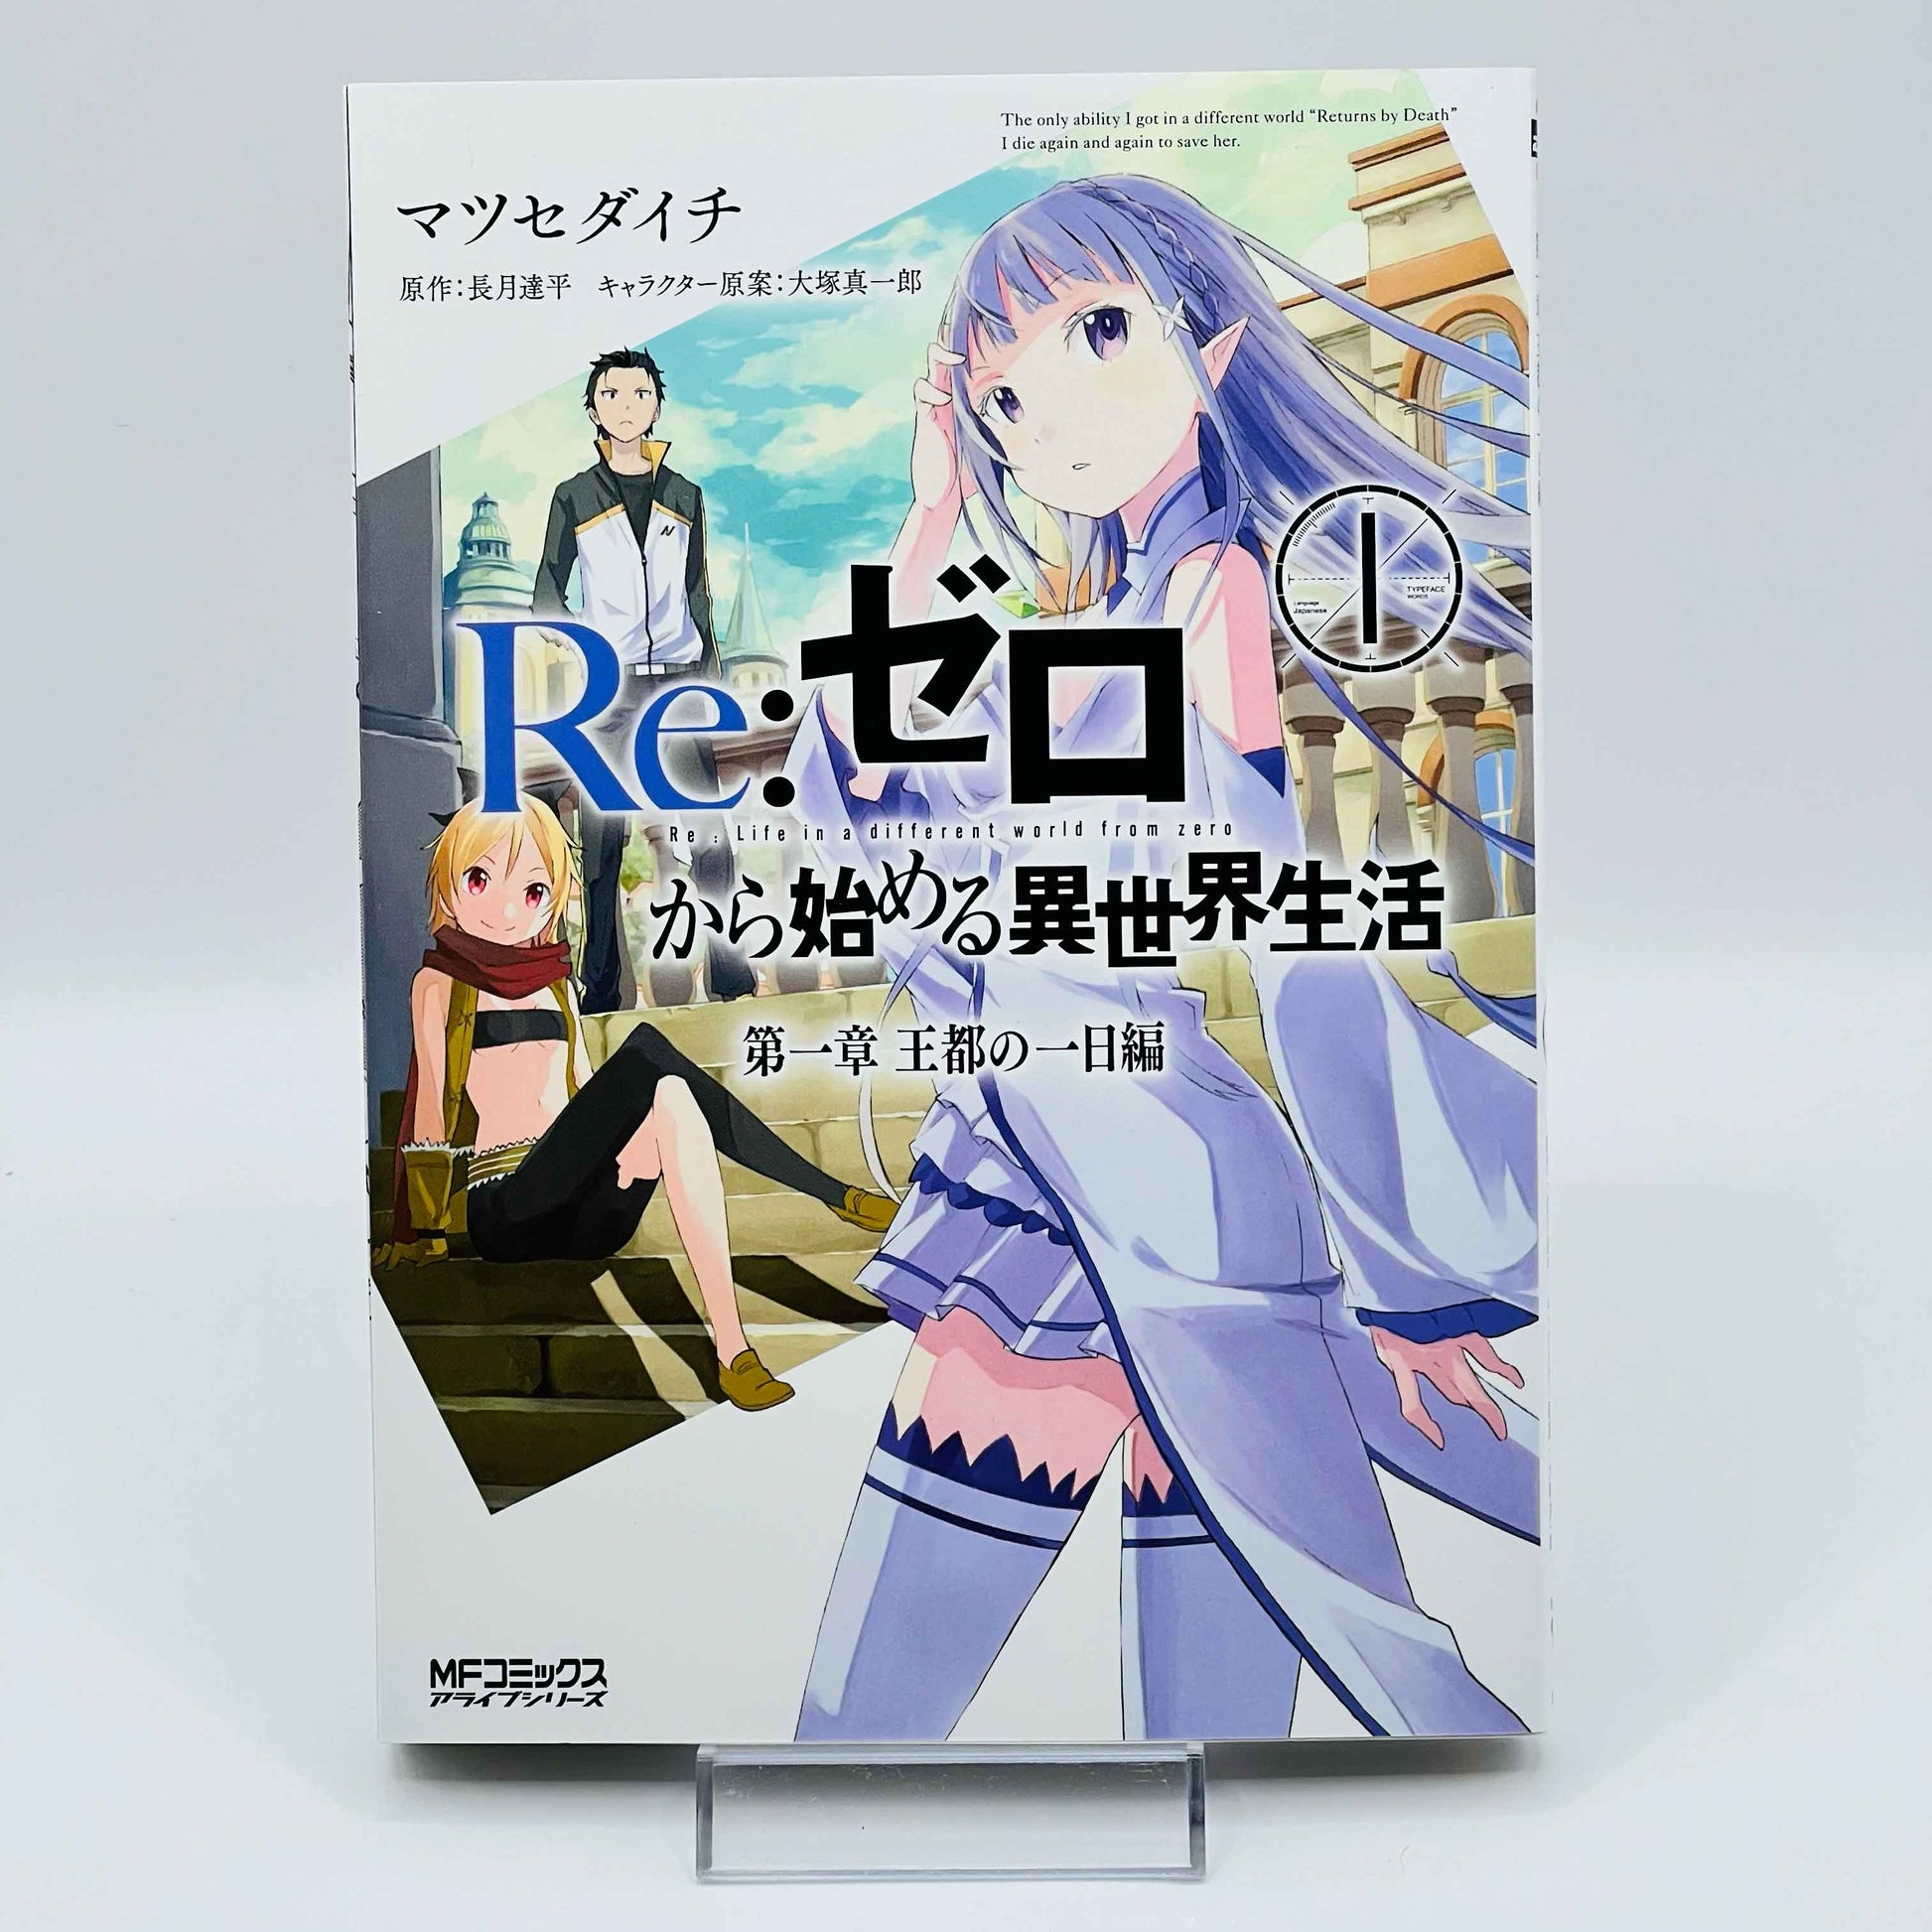 「Wish - Reserved」Re:Zero Ark 1 2 3 4 - Volume 01 - 1stPrint.net - 1st First Print Edition Manga Store - M-REZEROARK1234-LOT-002